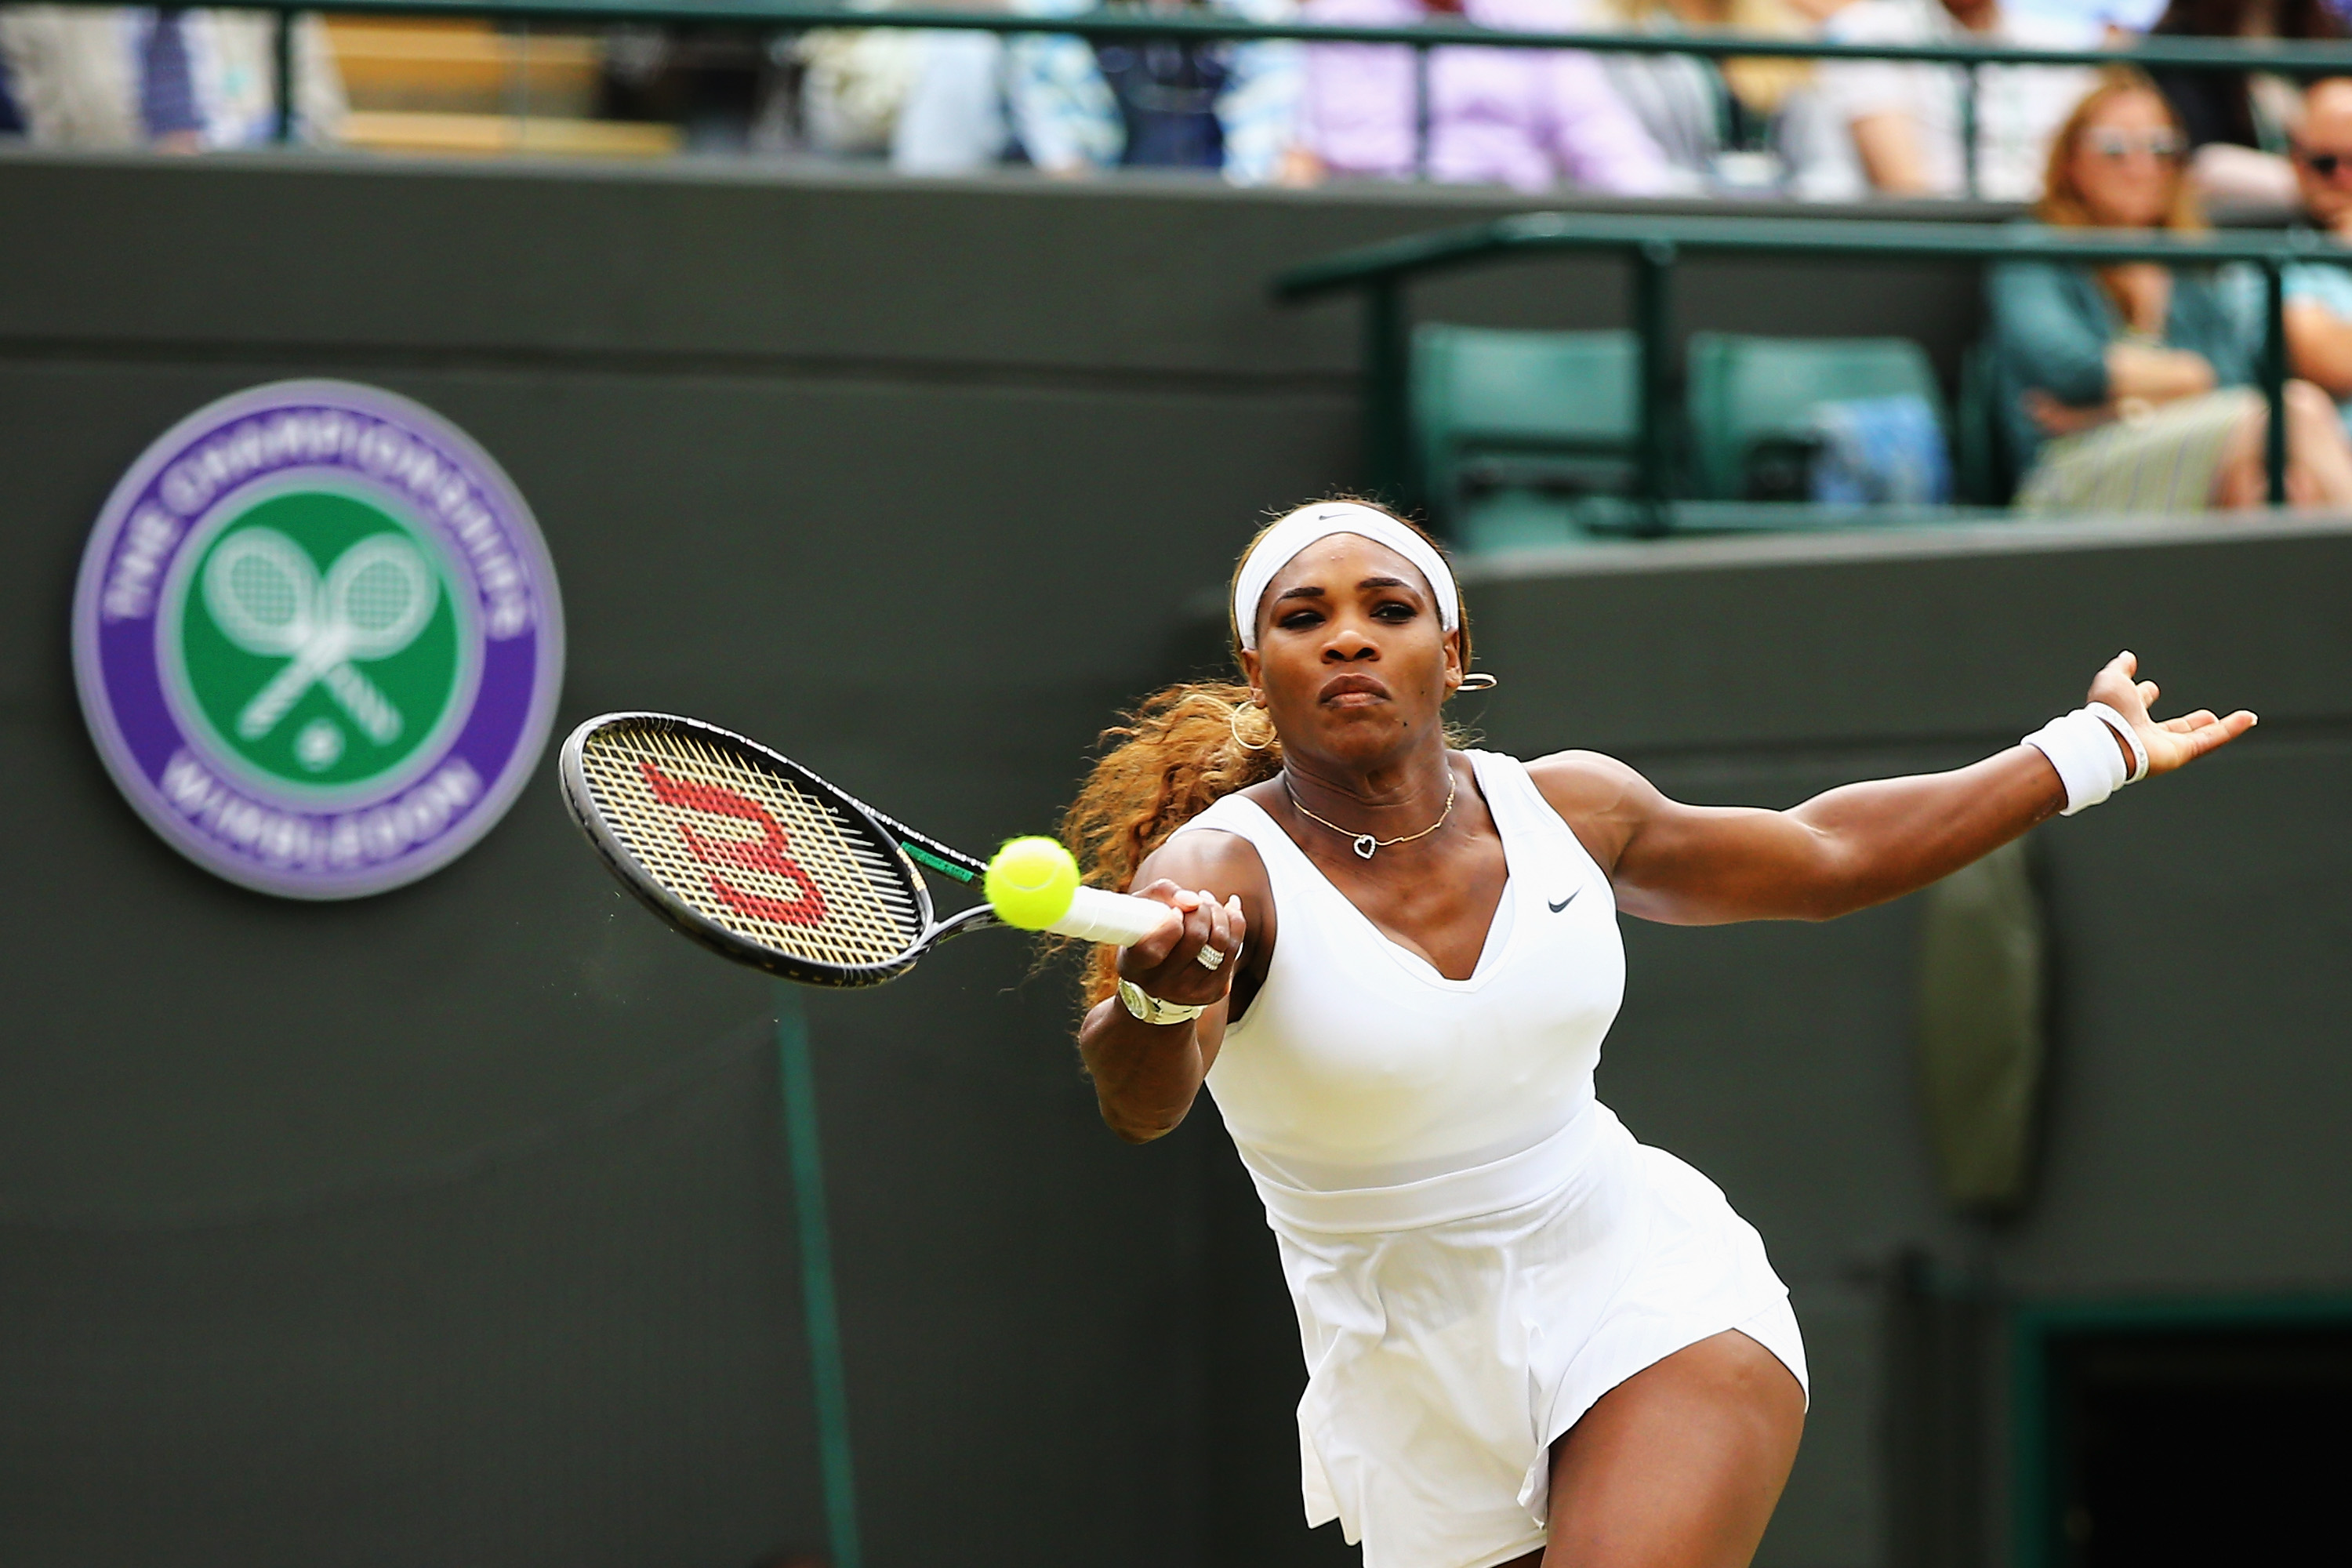 Serena Williams vs Alize Cornet Wimbledon 2014 Live Stream, TV Channel, Start Time, Odds